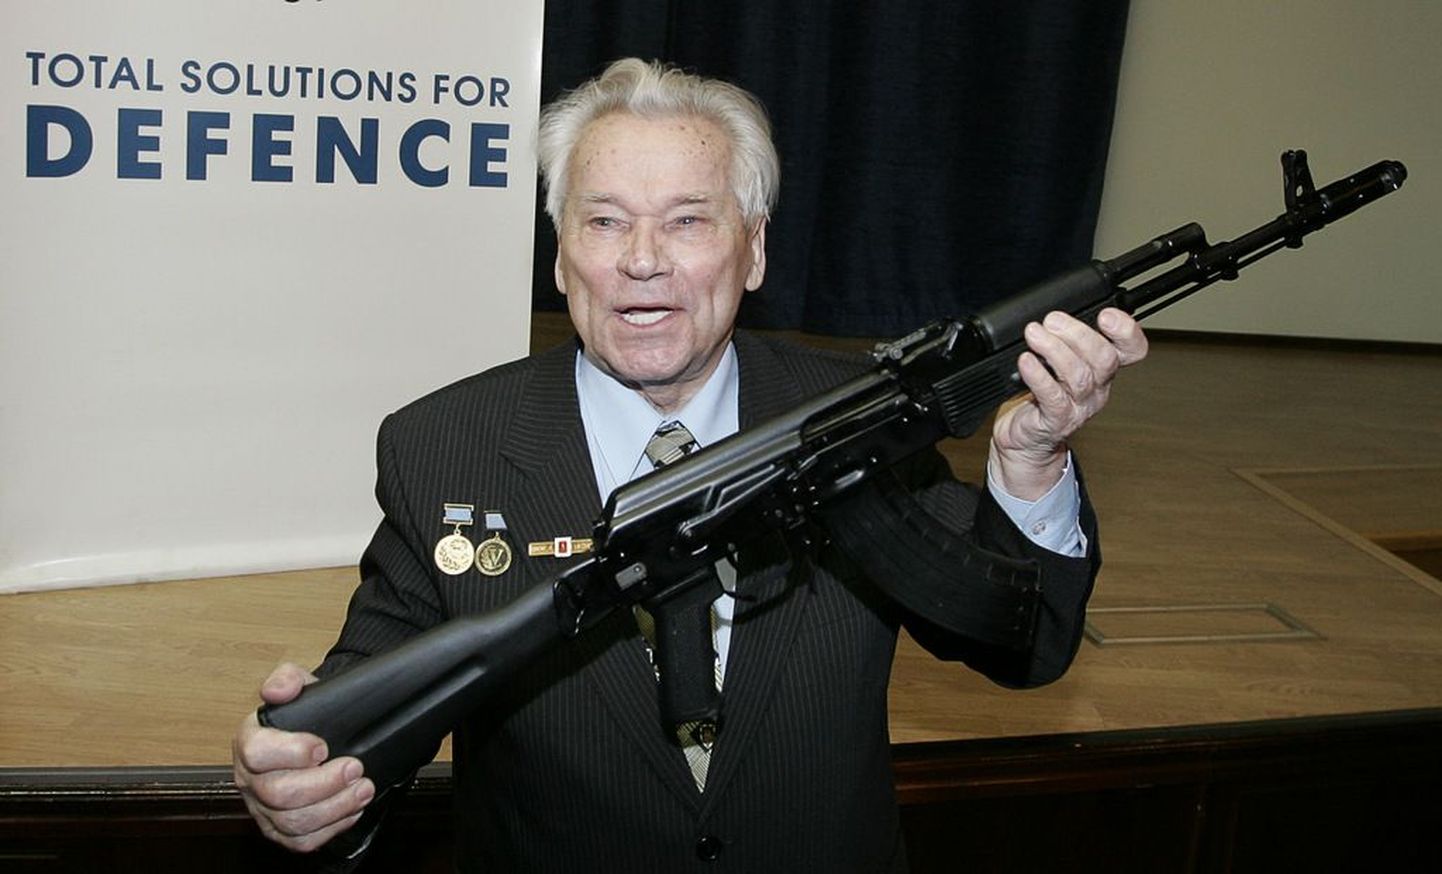 Vene kuulsa automaatrelva AK-47 looja Mihhail Kalašnikov koos tänapäevase mudeliga sellest relvast.